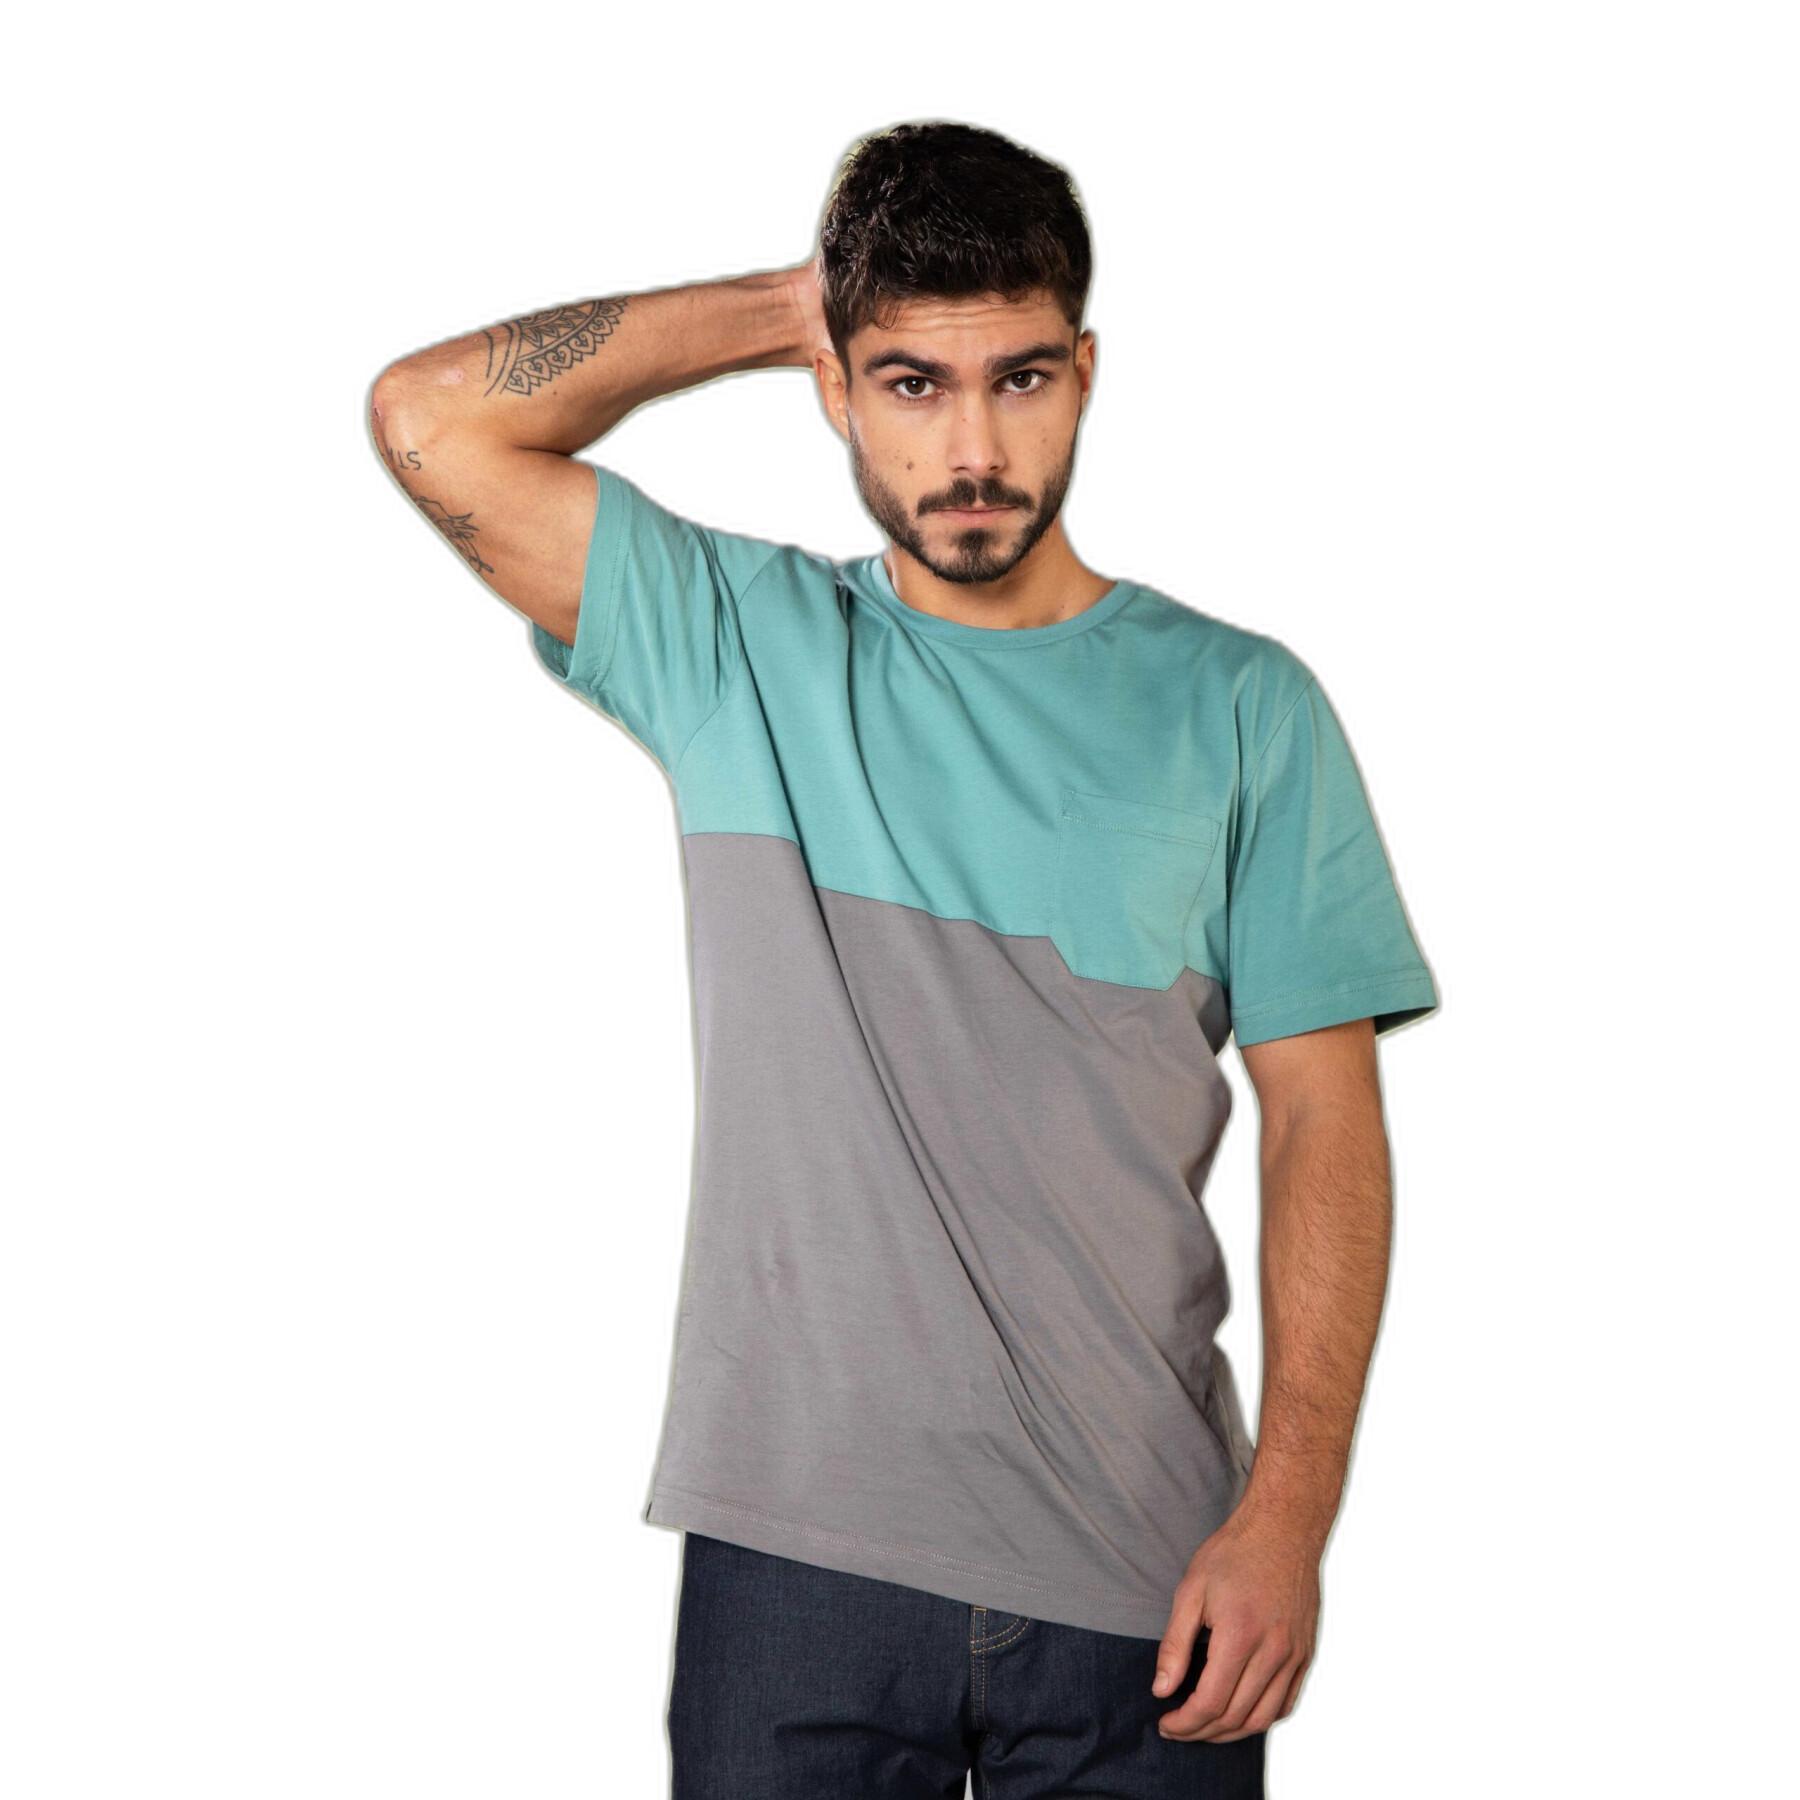 T-shirt com bolso bicolor Snap Climbing